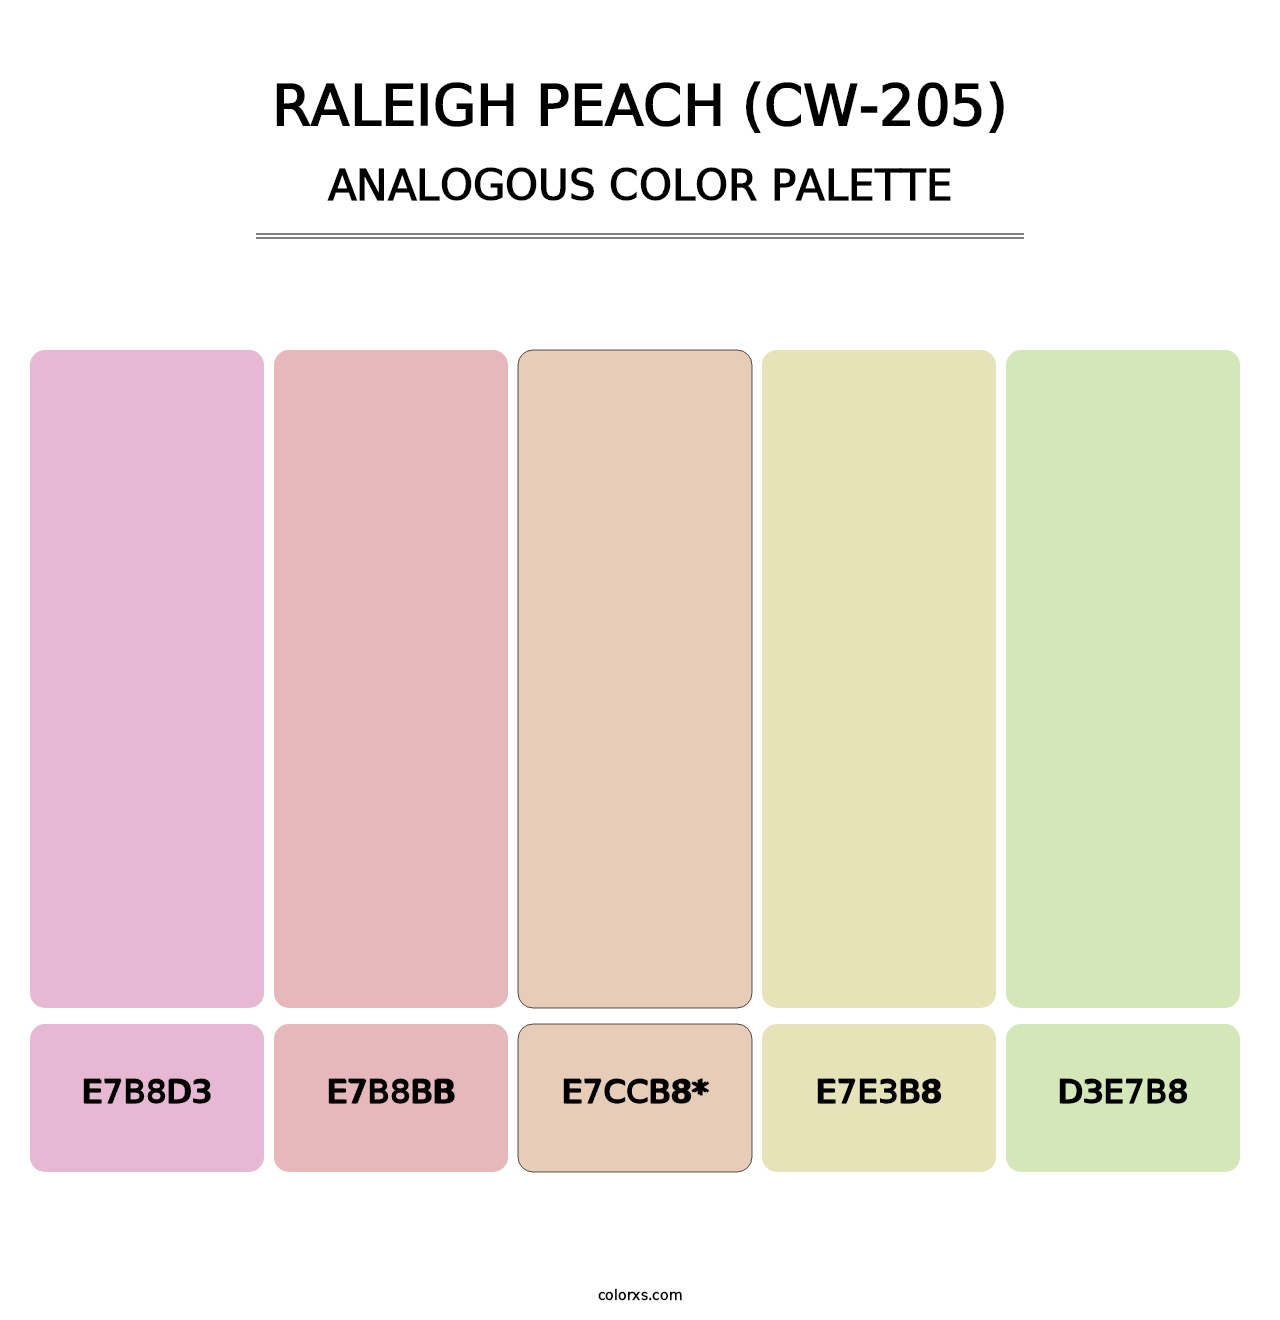 Raleigh Peach (CW-205) - Analogous Color Palette